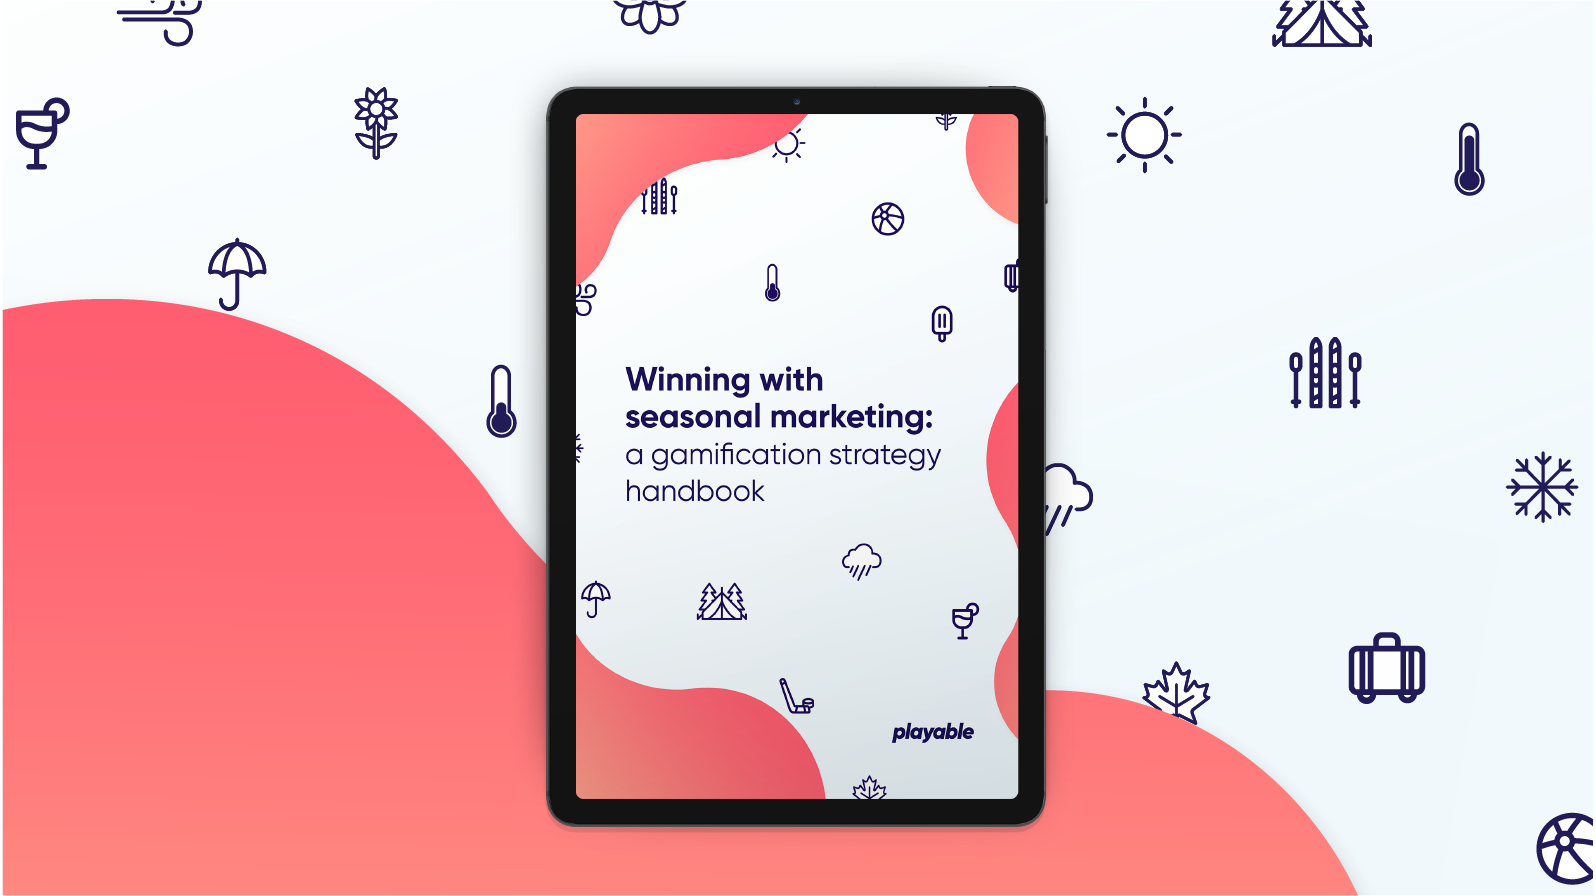 Seasonal marketing guide image